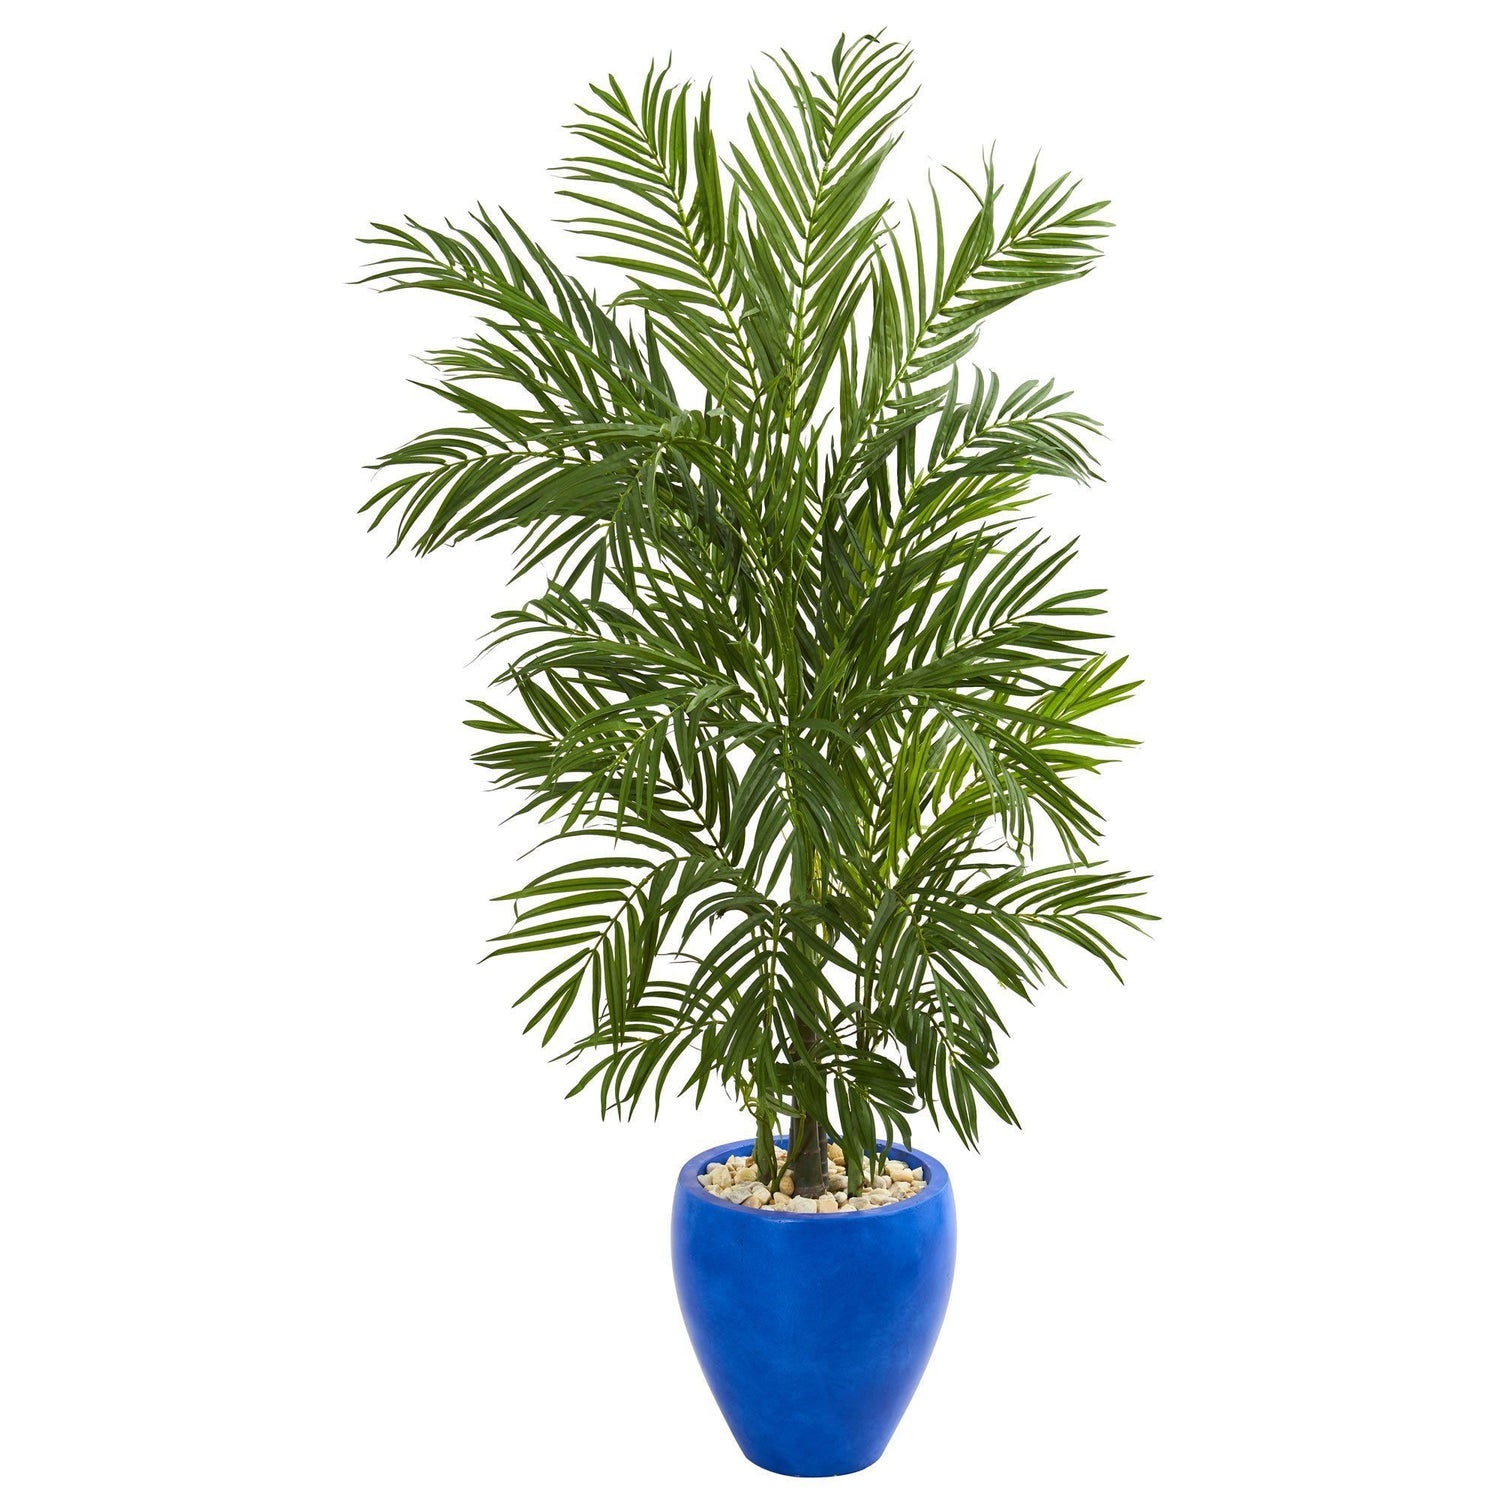 5.5’ Areca Palm Artificial Tree in Blue Planter